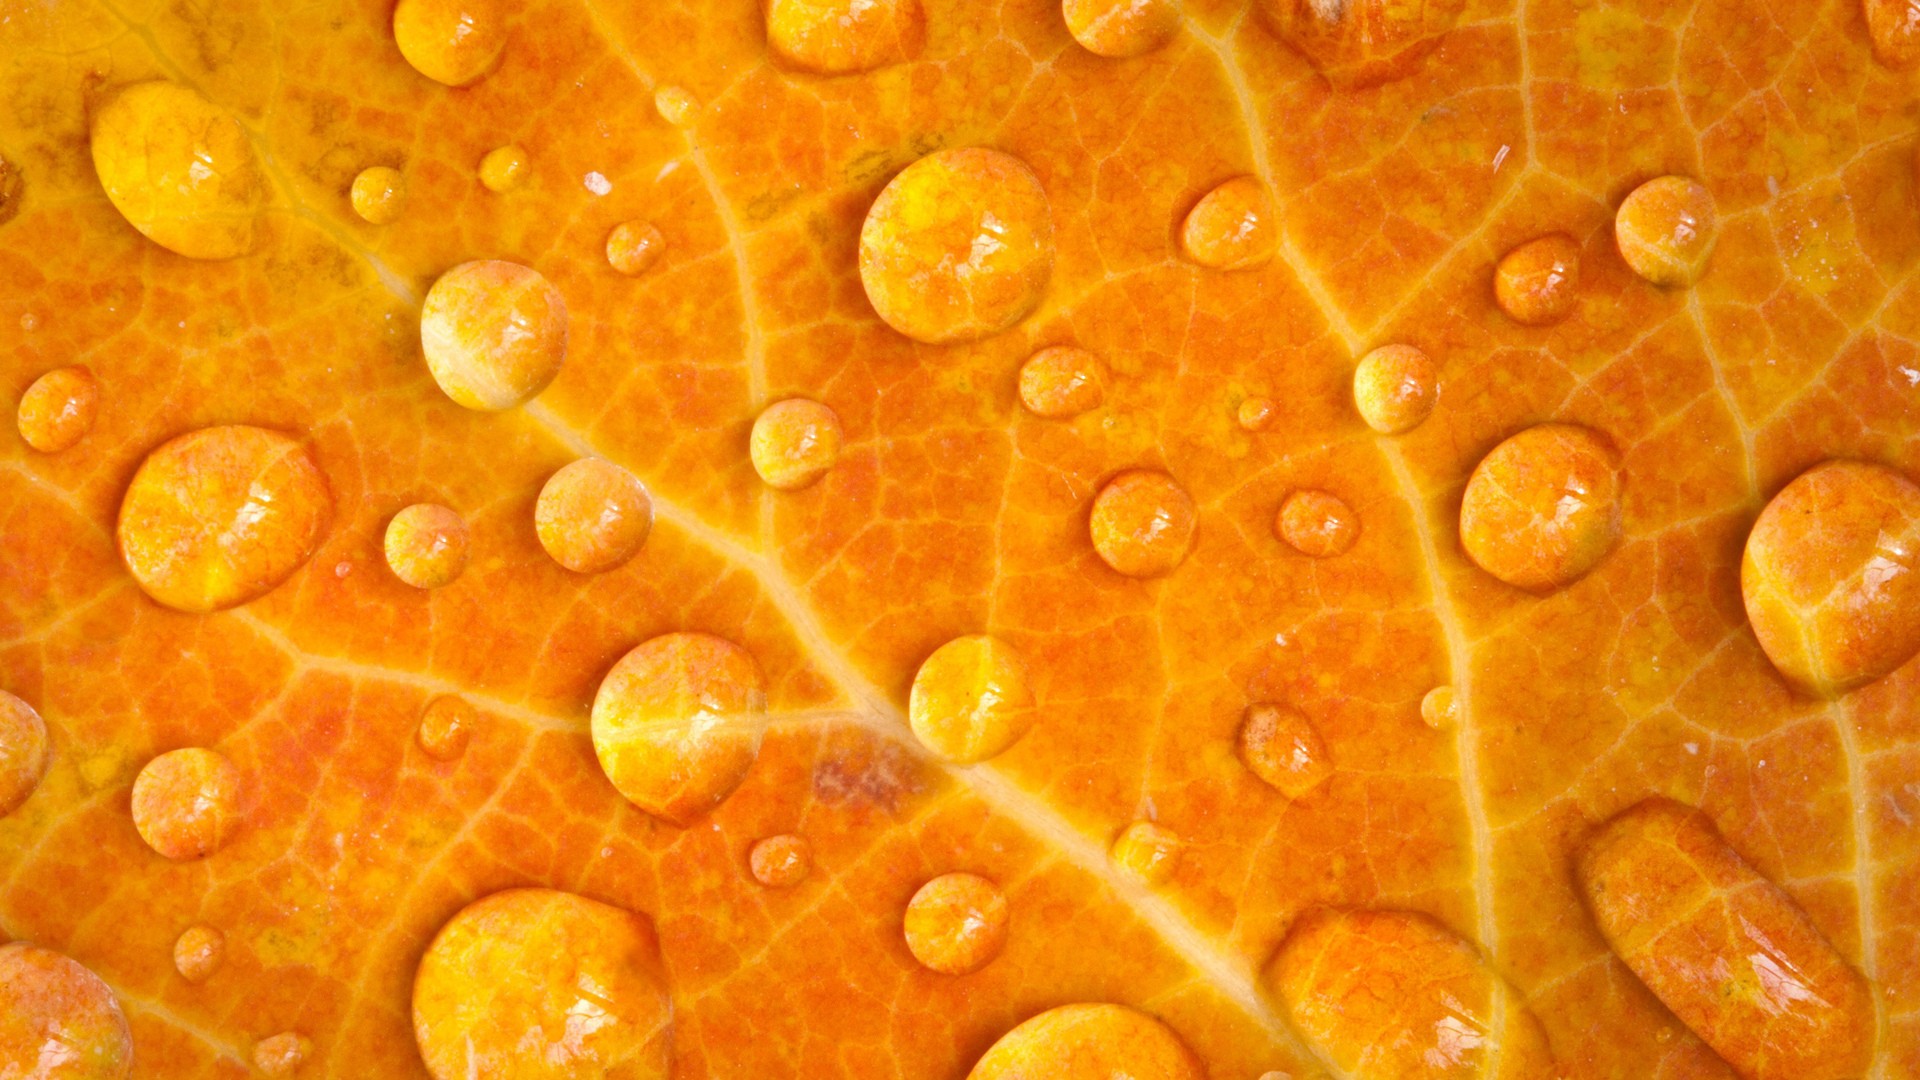 General 1920x1080 nature plants leaves macro closeup water drops veins orange fall maple leaves yellow texture